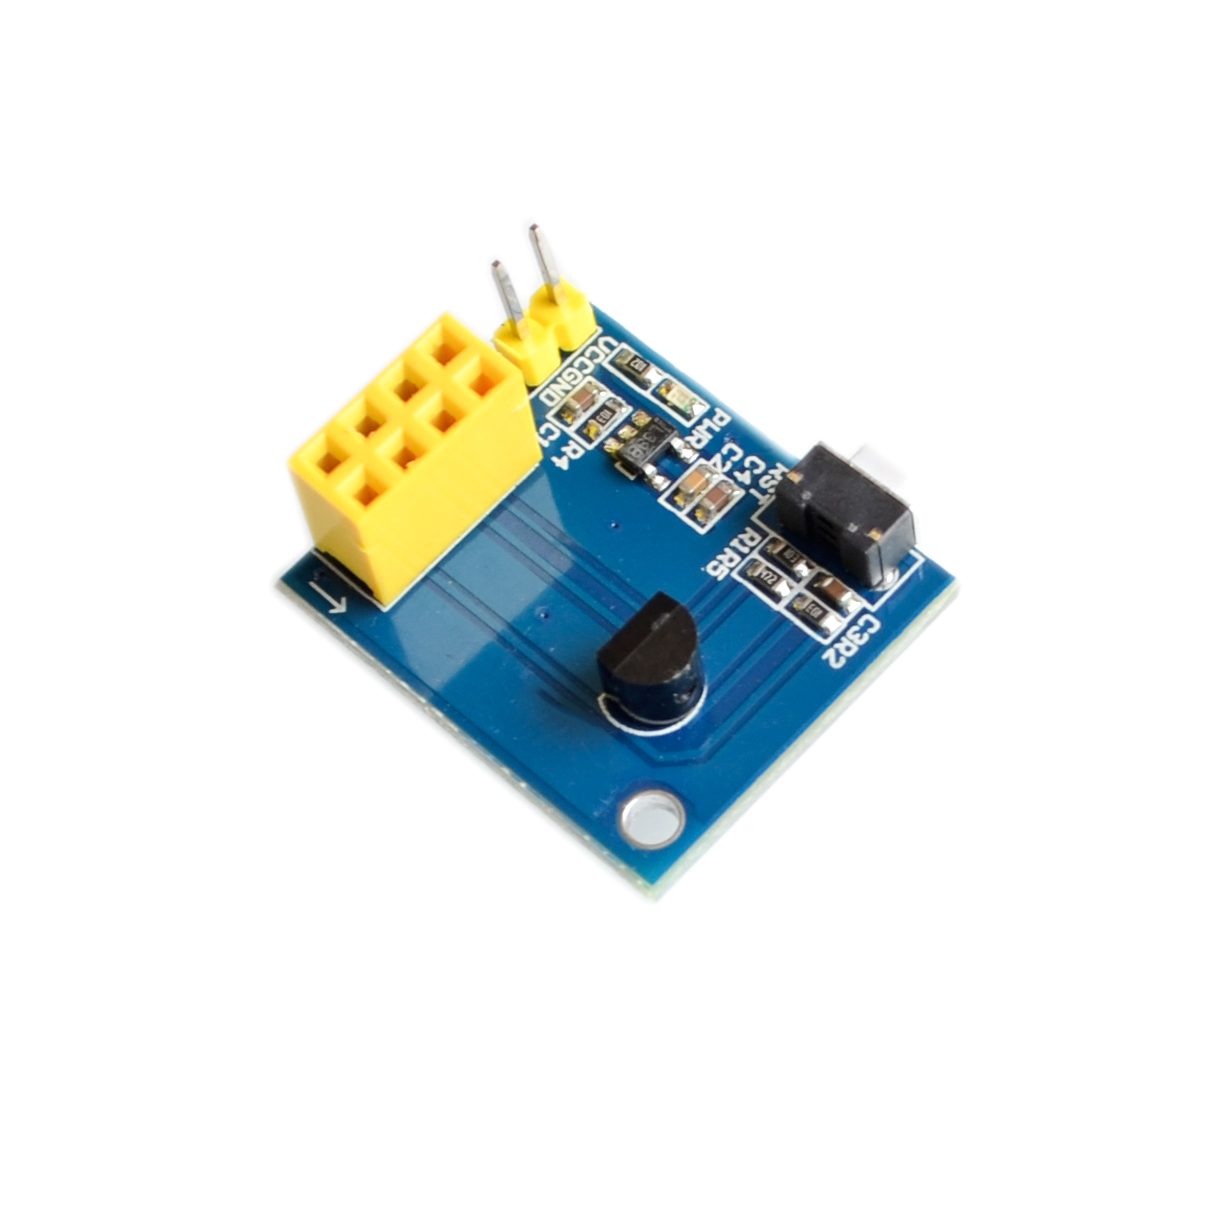 1PCSESP8266 ESP-01 ESP-01S DS18B20 Temperature Humidity Sensor Module esp8266 Wifi NodeMCU Smart Home IOT DIY Kit